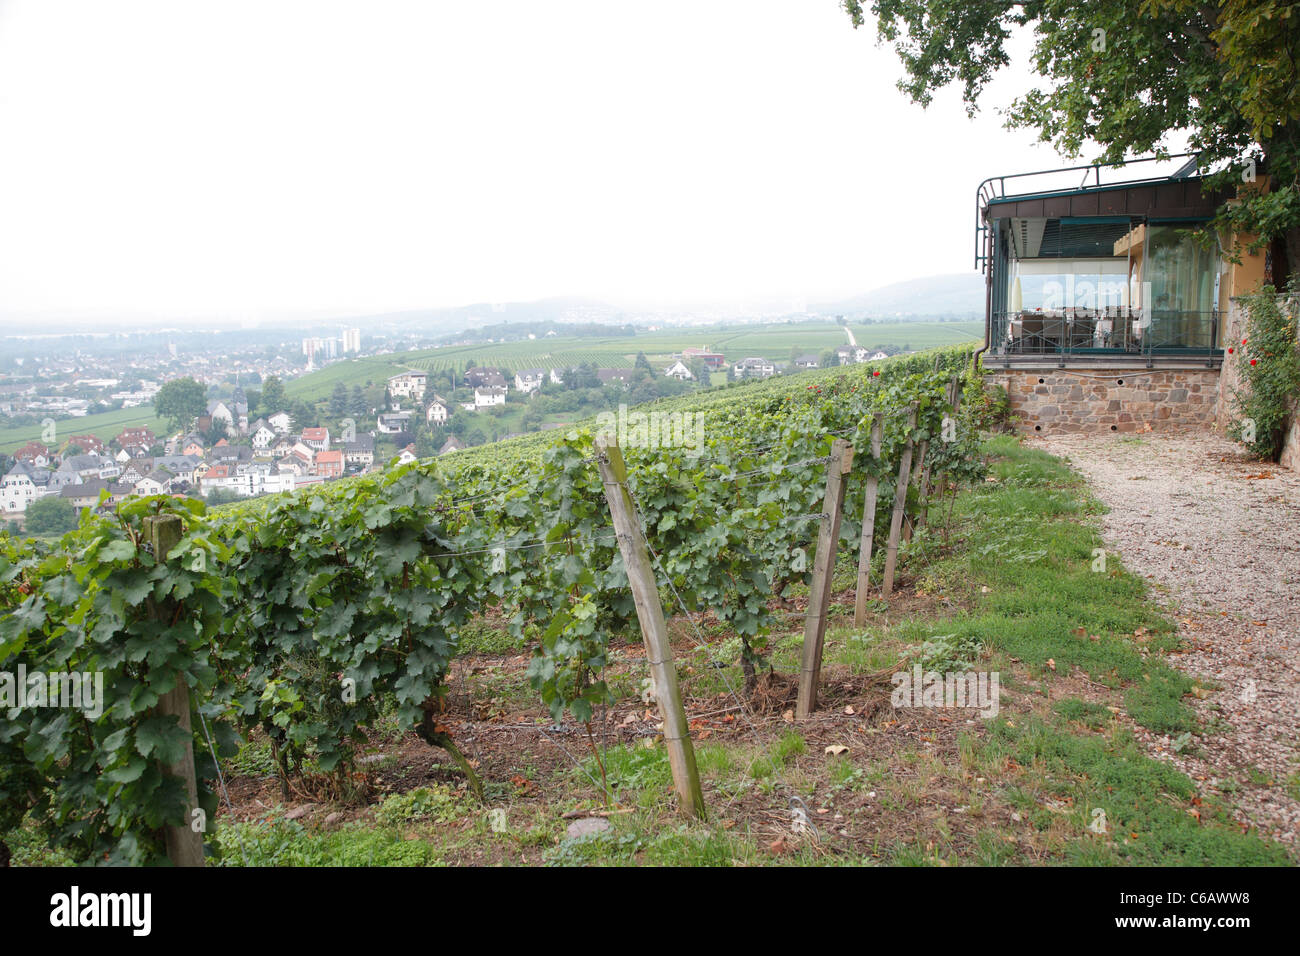 Grape vines, Johannisberg Castle winery vineyard, Rhine valley river district, Germany Stock Photo